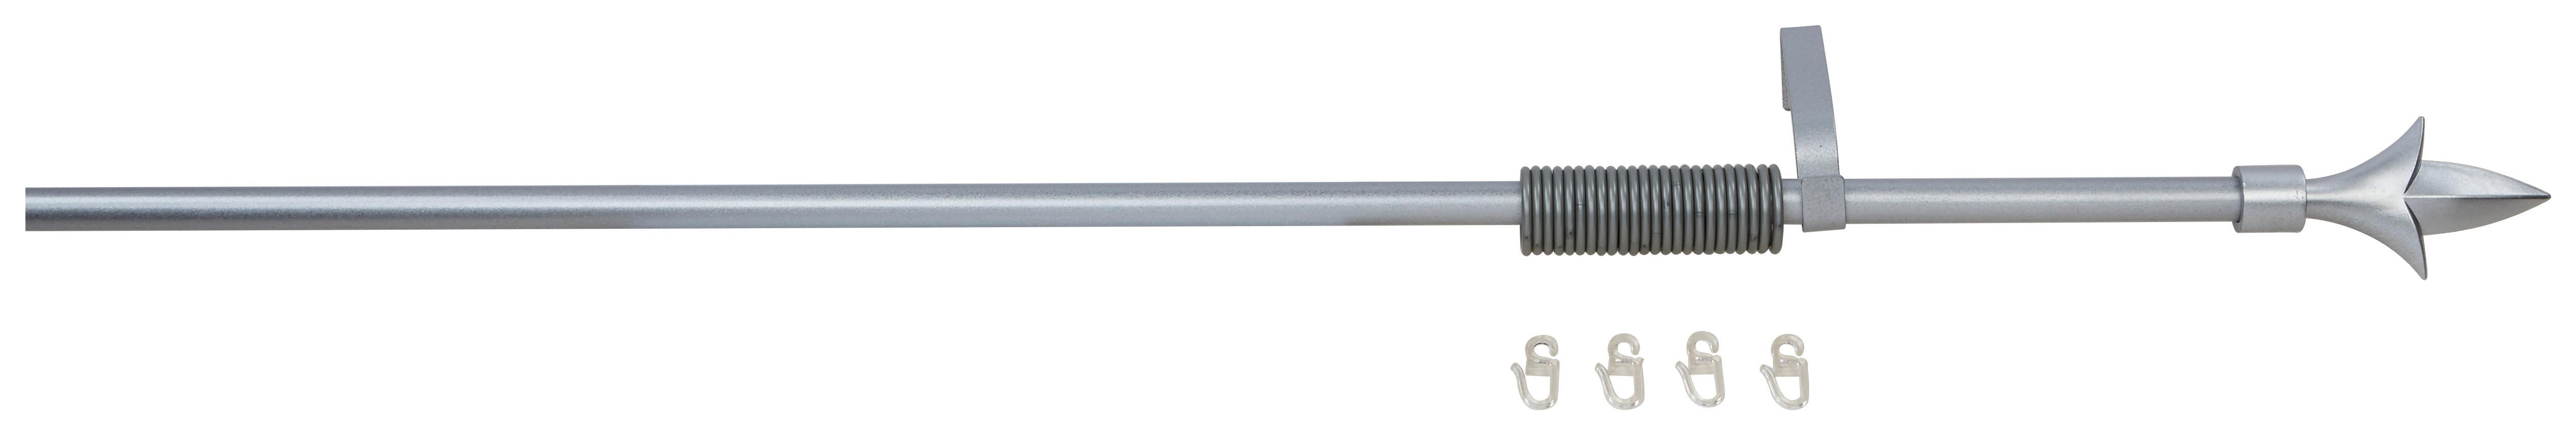 Rundstangengarnitur 1-Lfg Paul Silberfarben L: 130-240 cm - Silberfarben, KONVENTIONELL, Metall (130-240cm) - Ondega